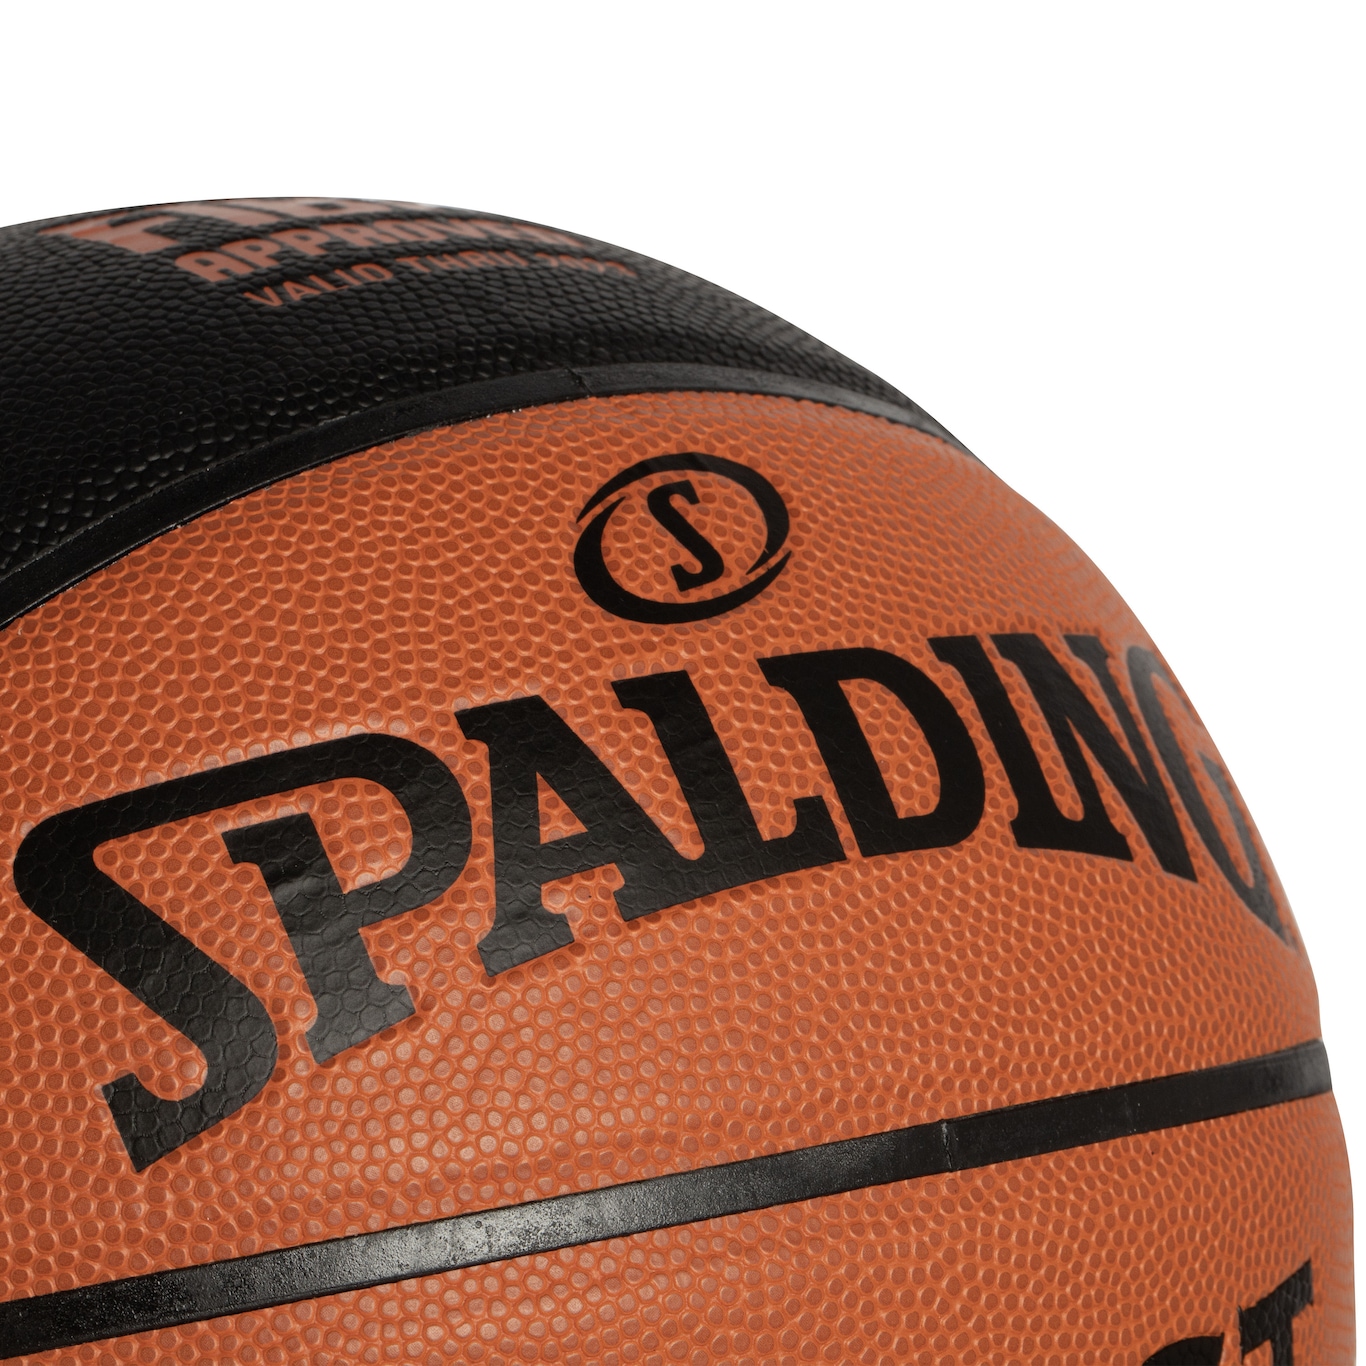 Bola Basquete Spalding REACT TF-250 FIBA - Laranja e Preto